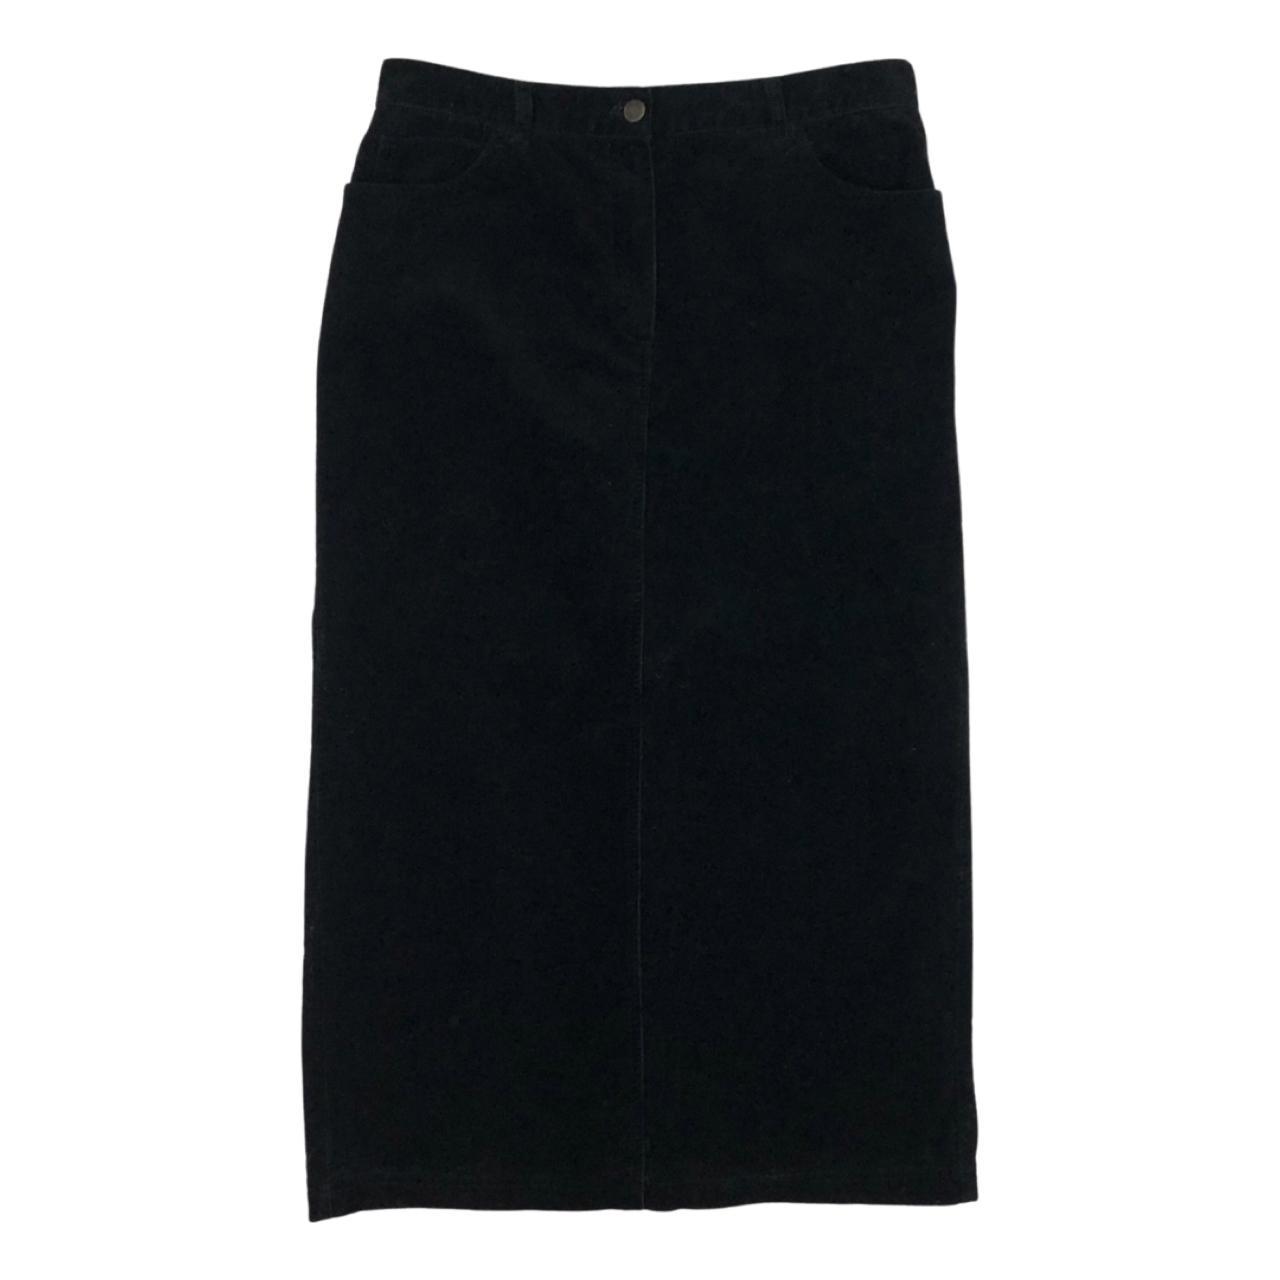 Vintage Black Corduroy Maxi Skirt | 90s Waled Cotton... - Depop